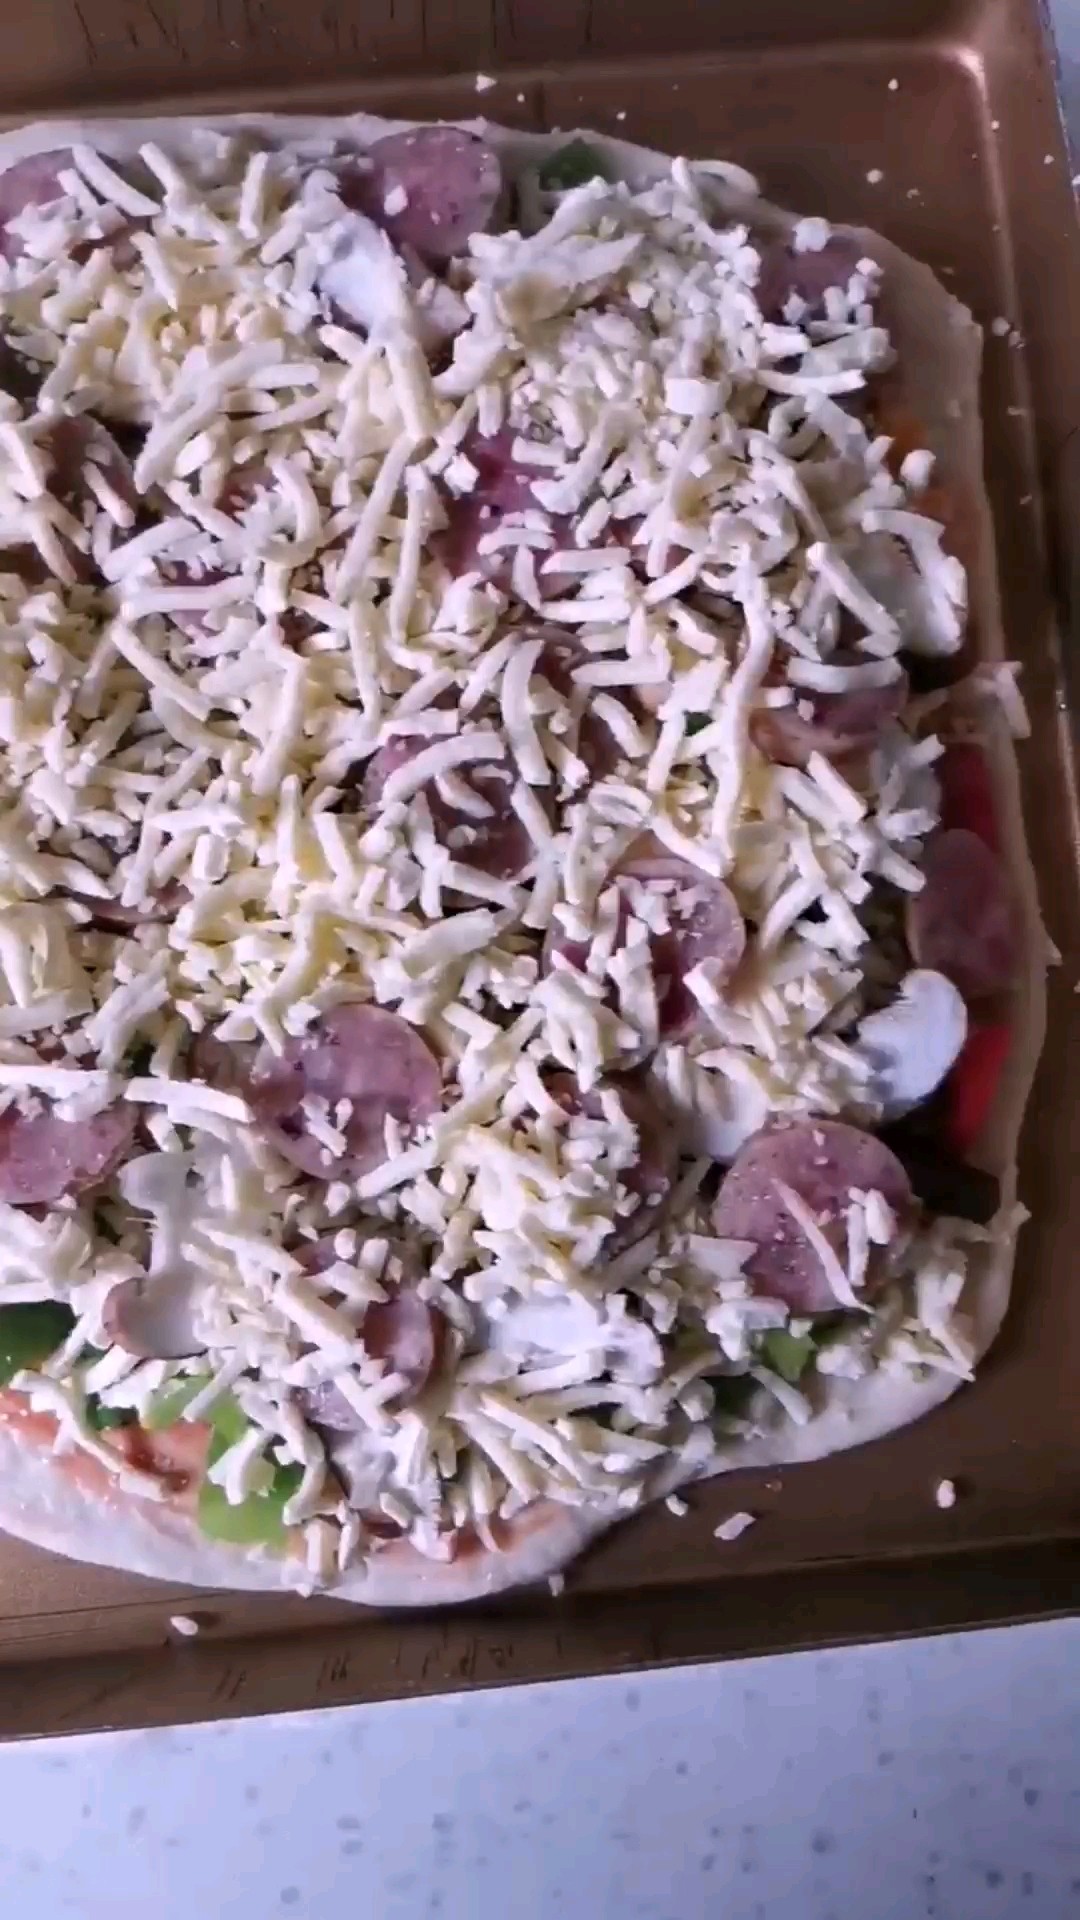 Thin Bottom Pizza with Sausage and Mushroom recipe